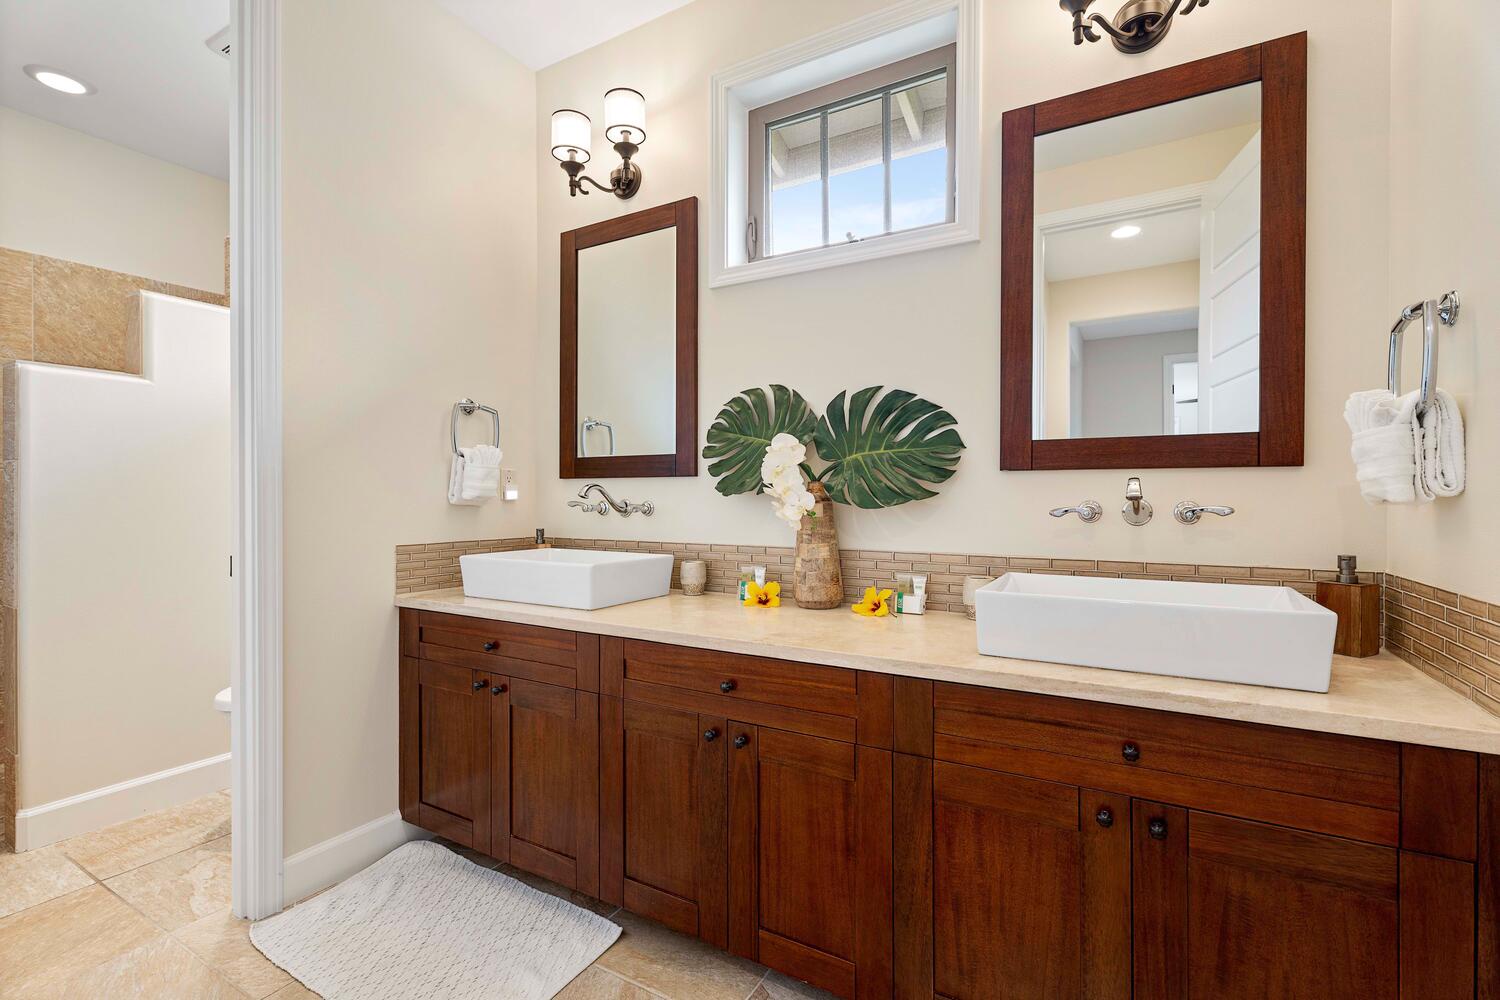 Kailua-Kona Vacation Rentals, Holua Kai #26 - Stylish third bathroom vanity featuring dual sinks and classic wooden cabinetry.